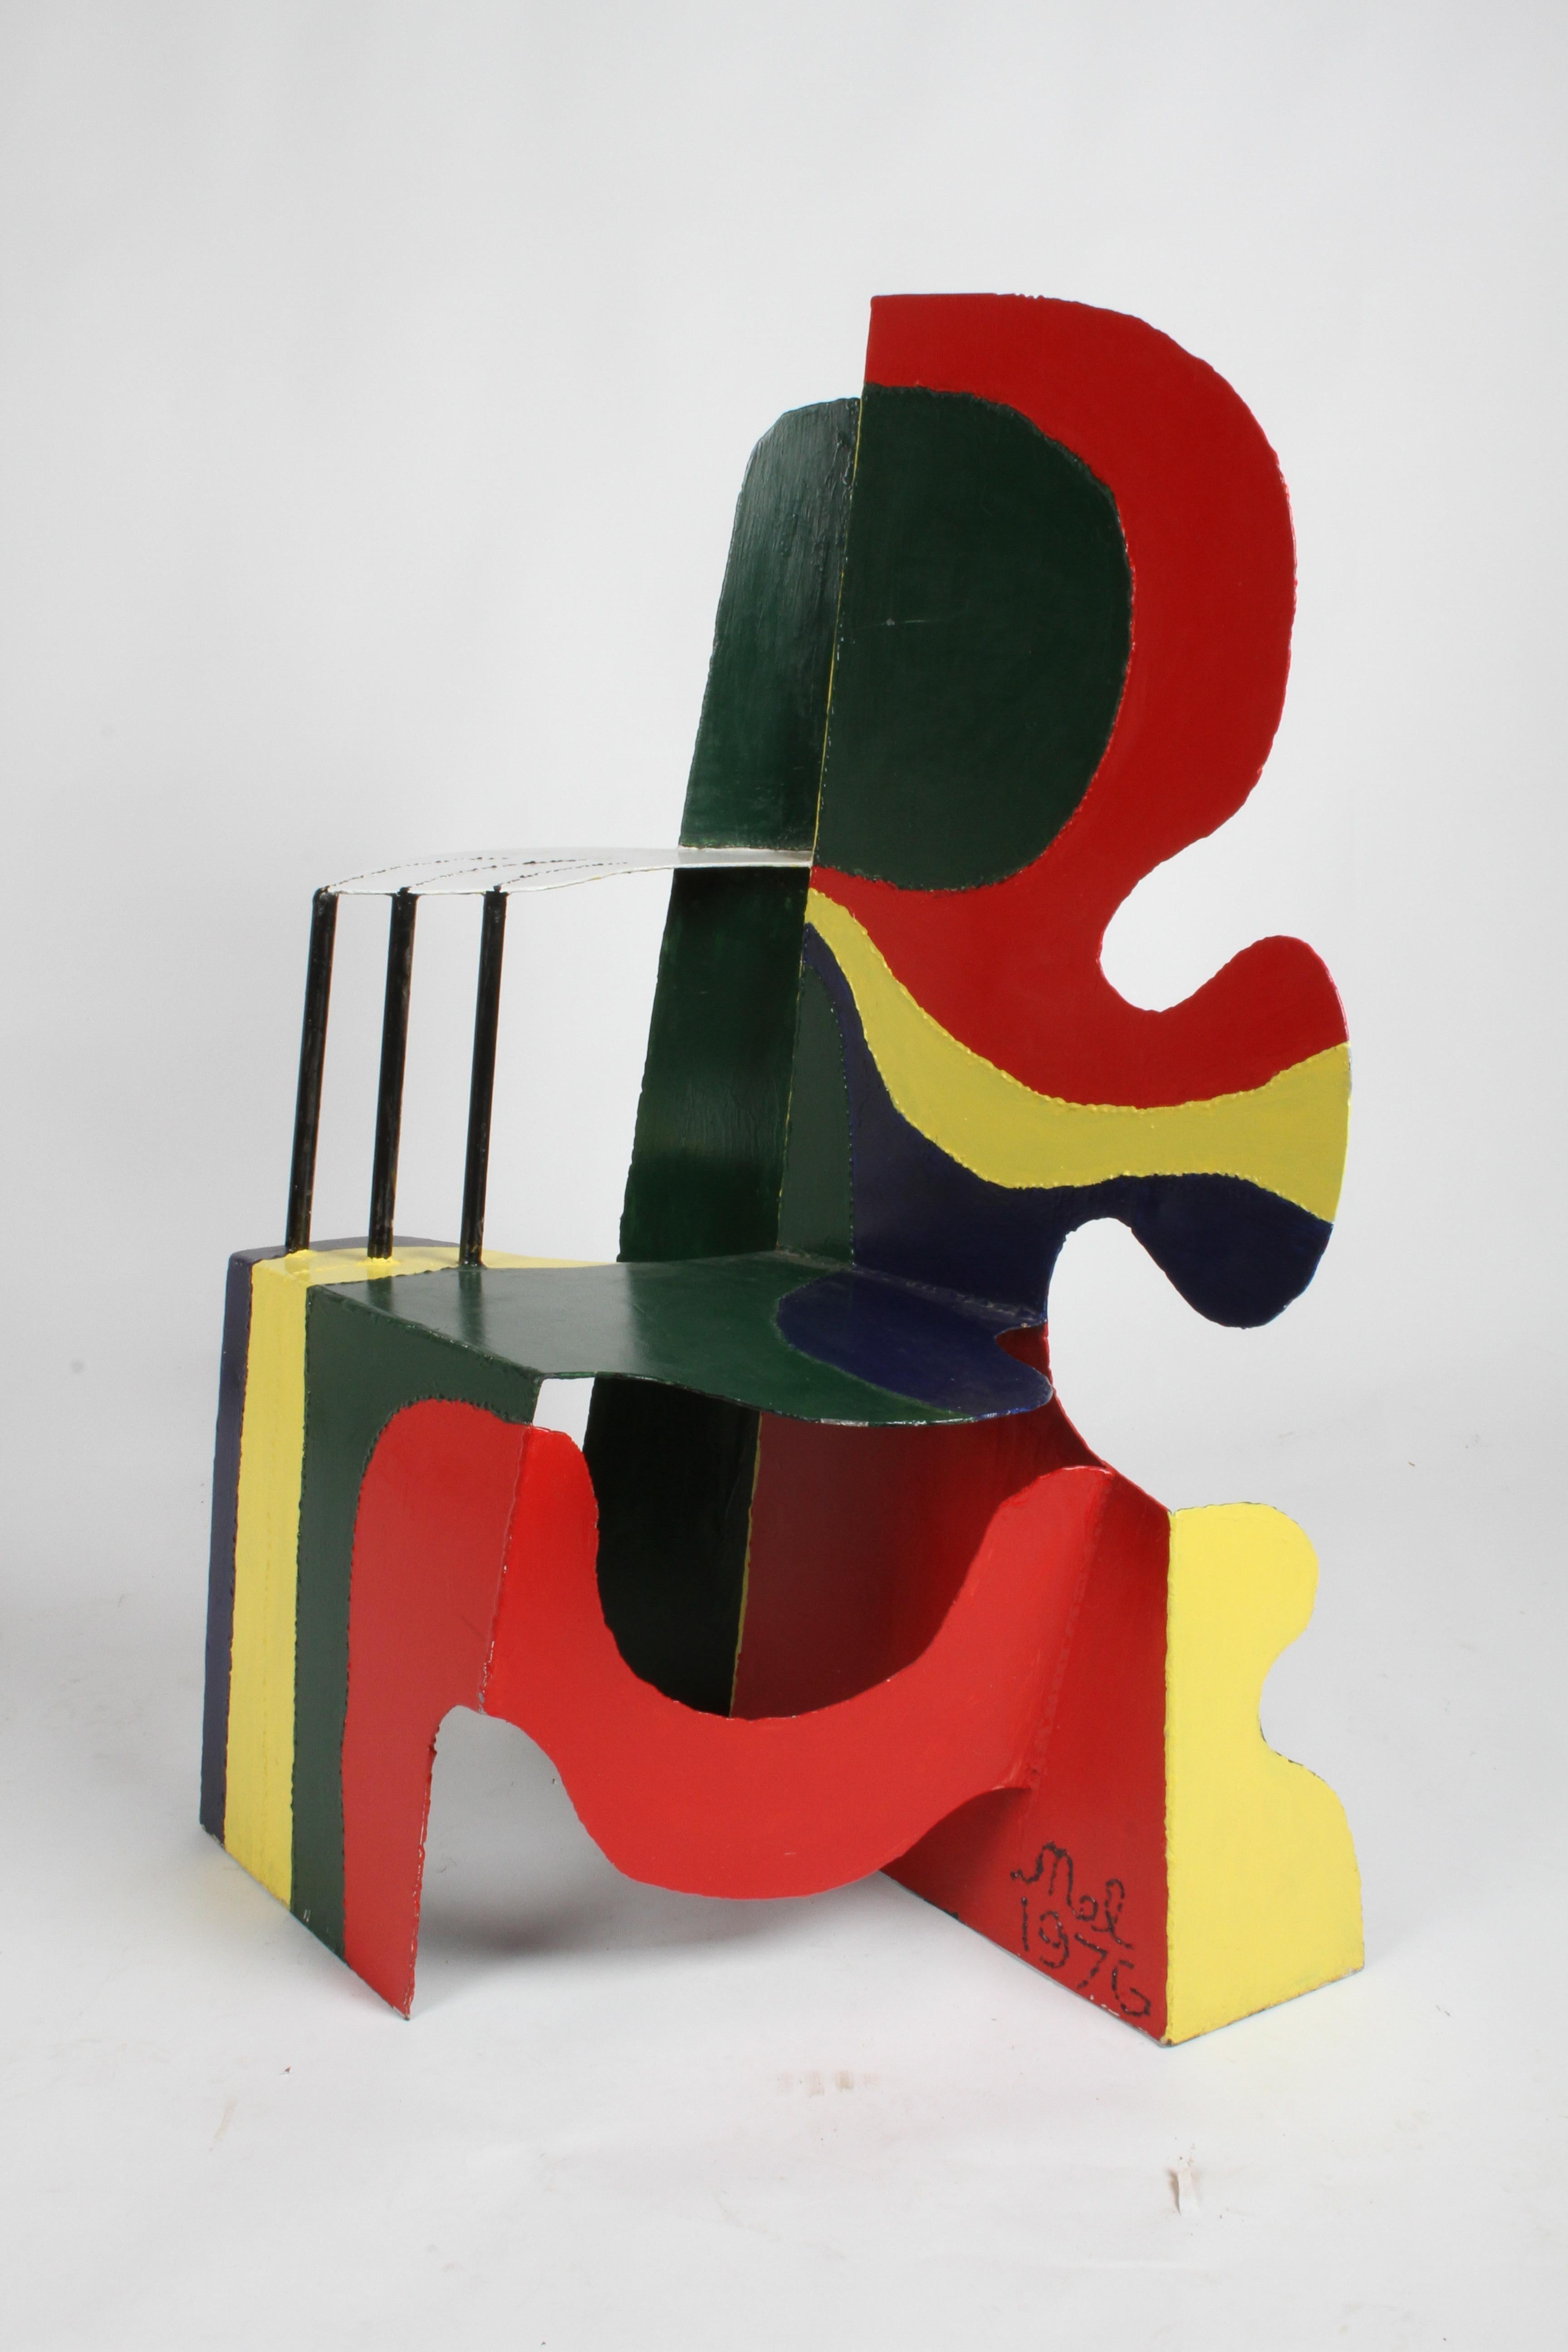 Artist Brother Mel Meyer's Homage to Alexander Calder 11/11/76 Chair Sculpture For Sale 9